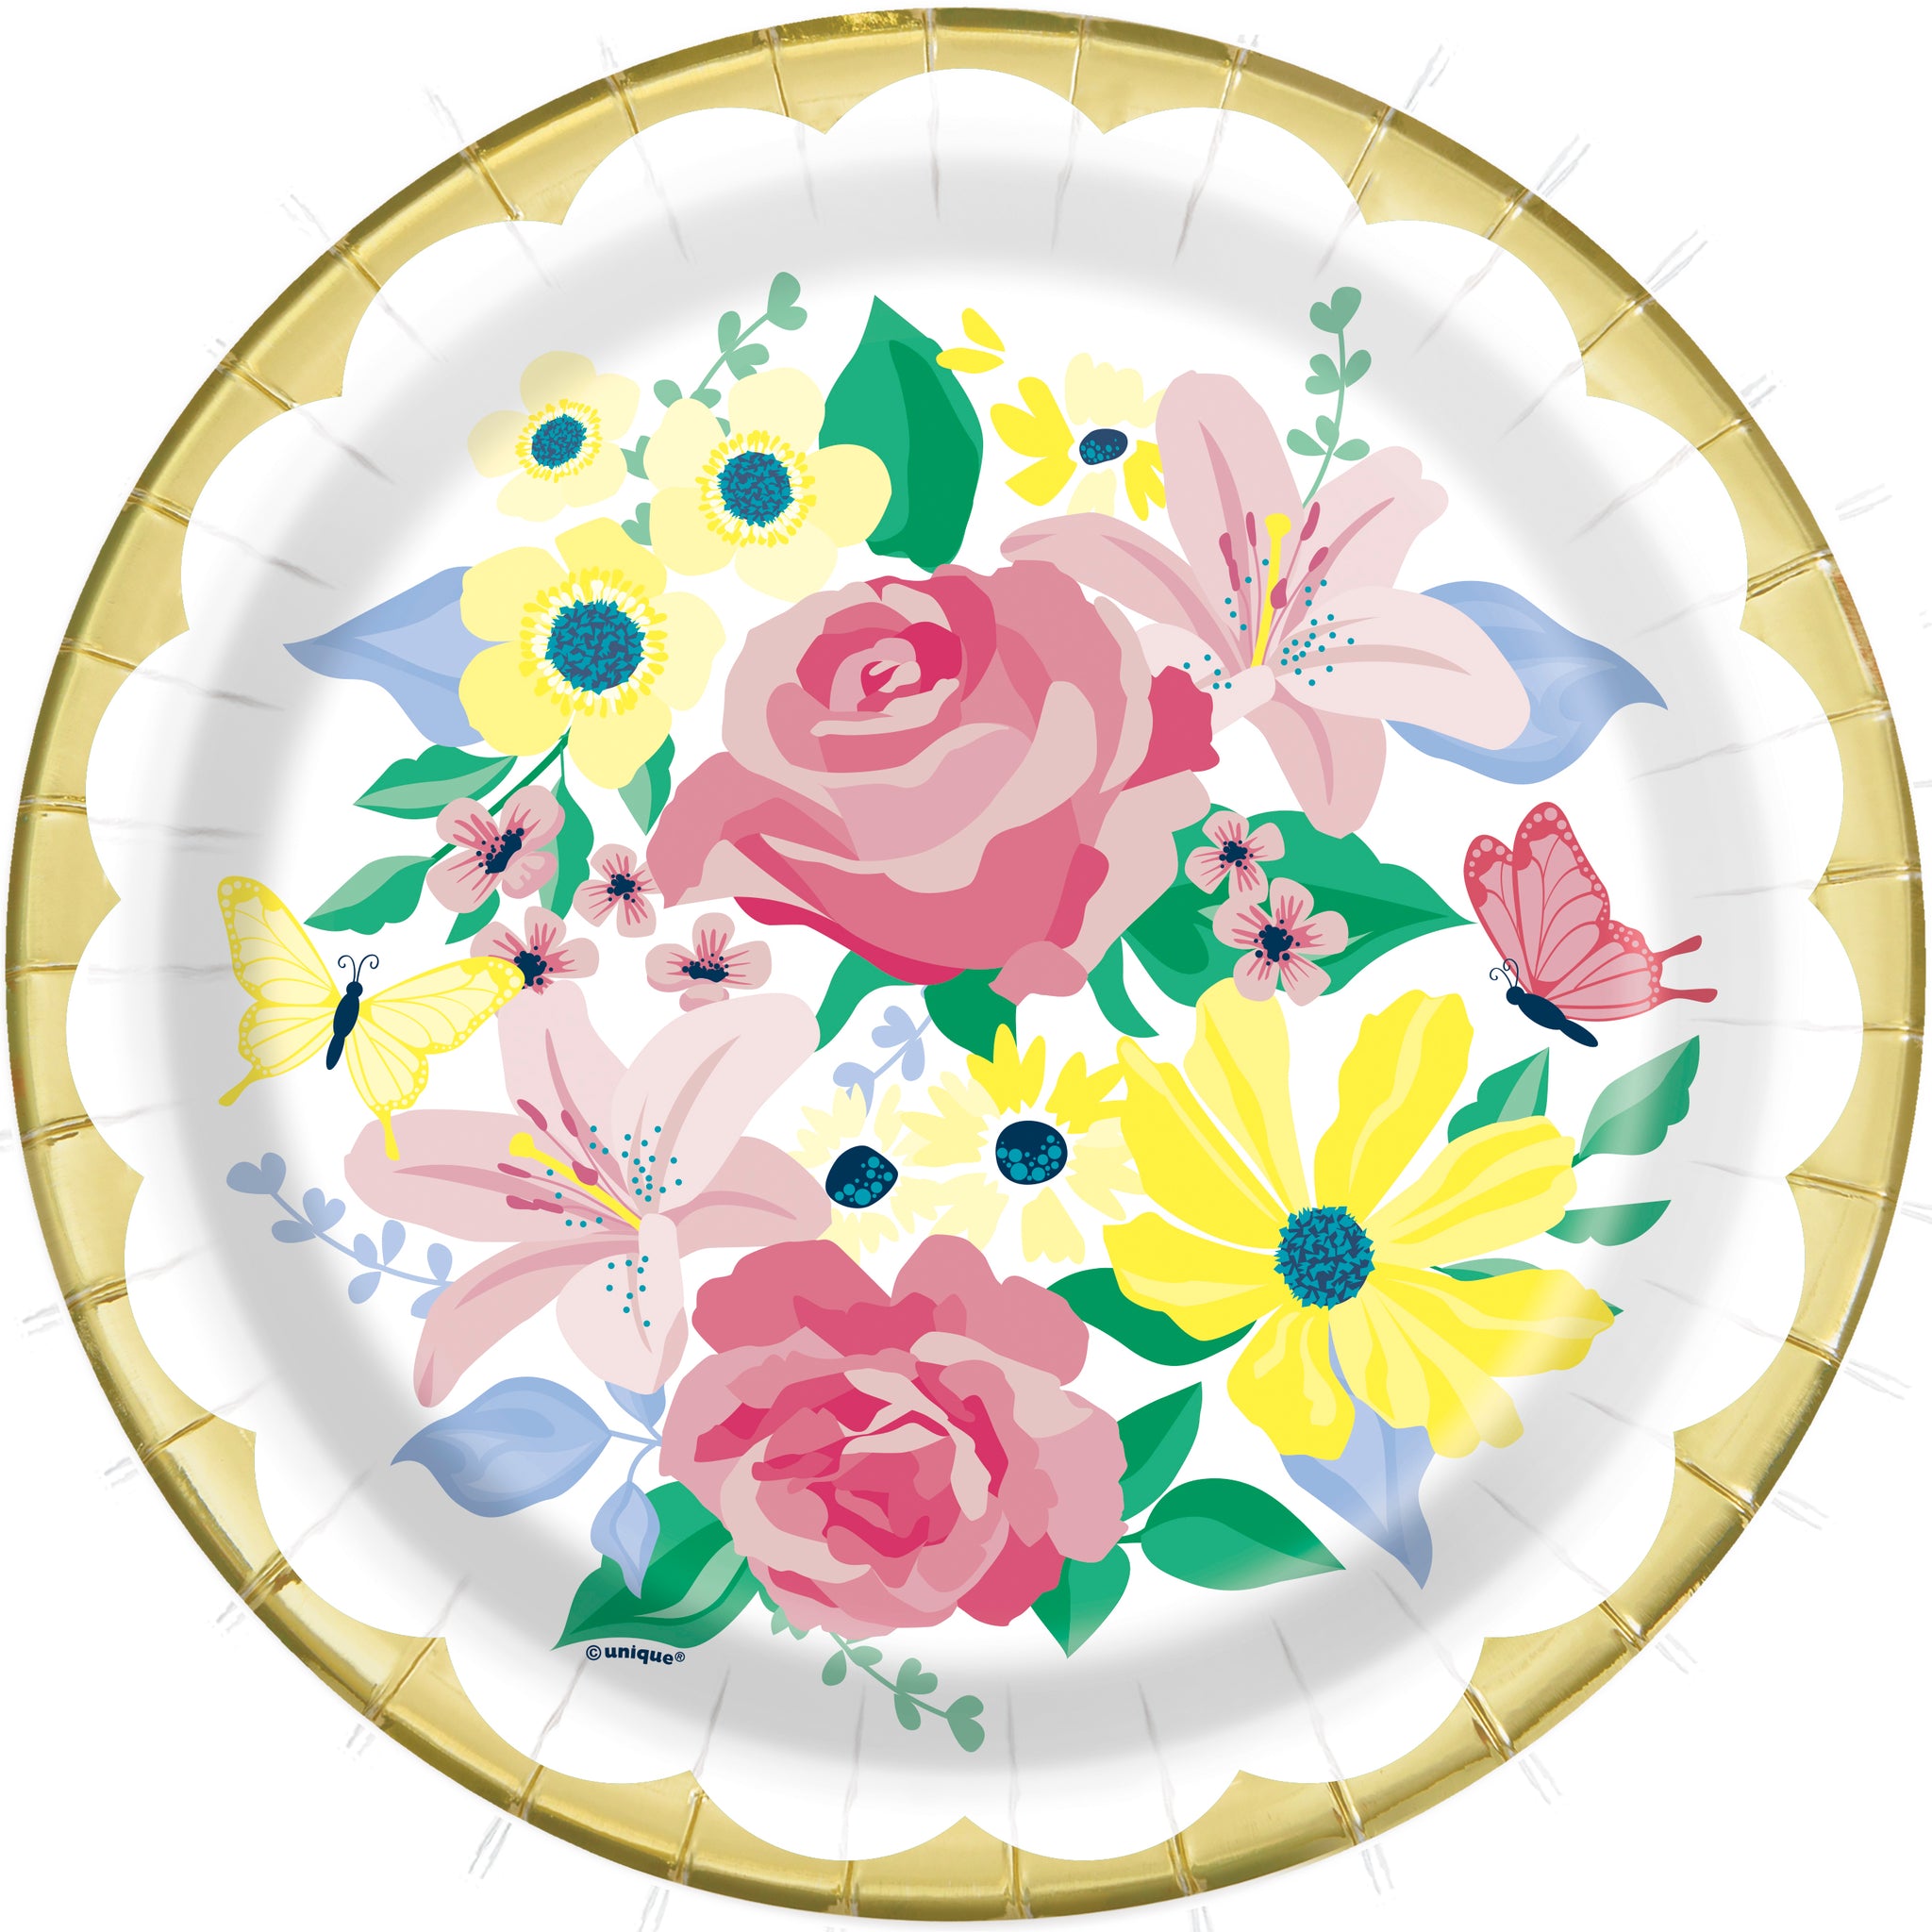 Pastel Floral Round 9" Dinner Plates, 8ct - Foil Stamped